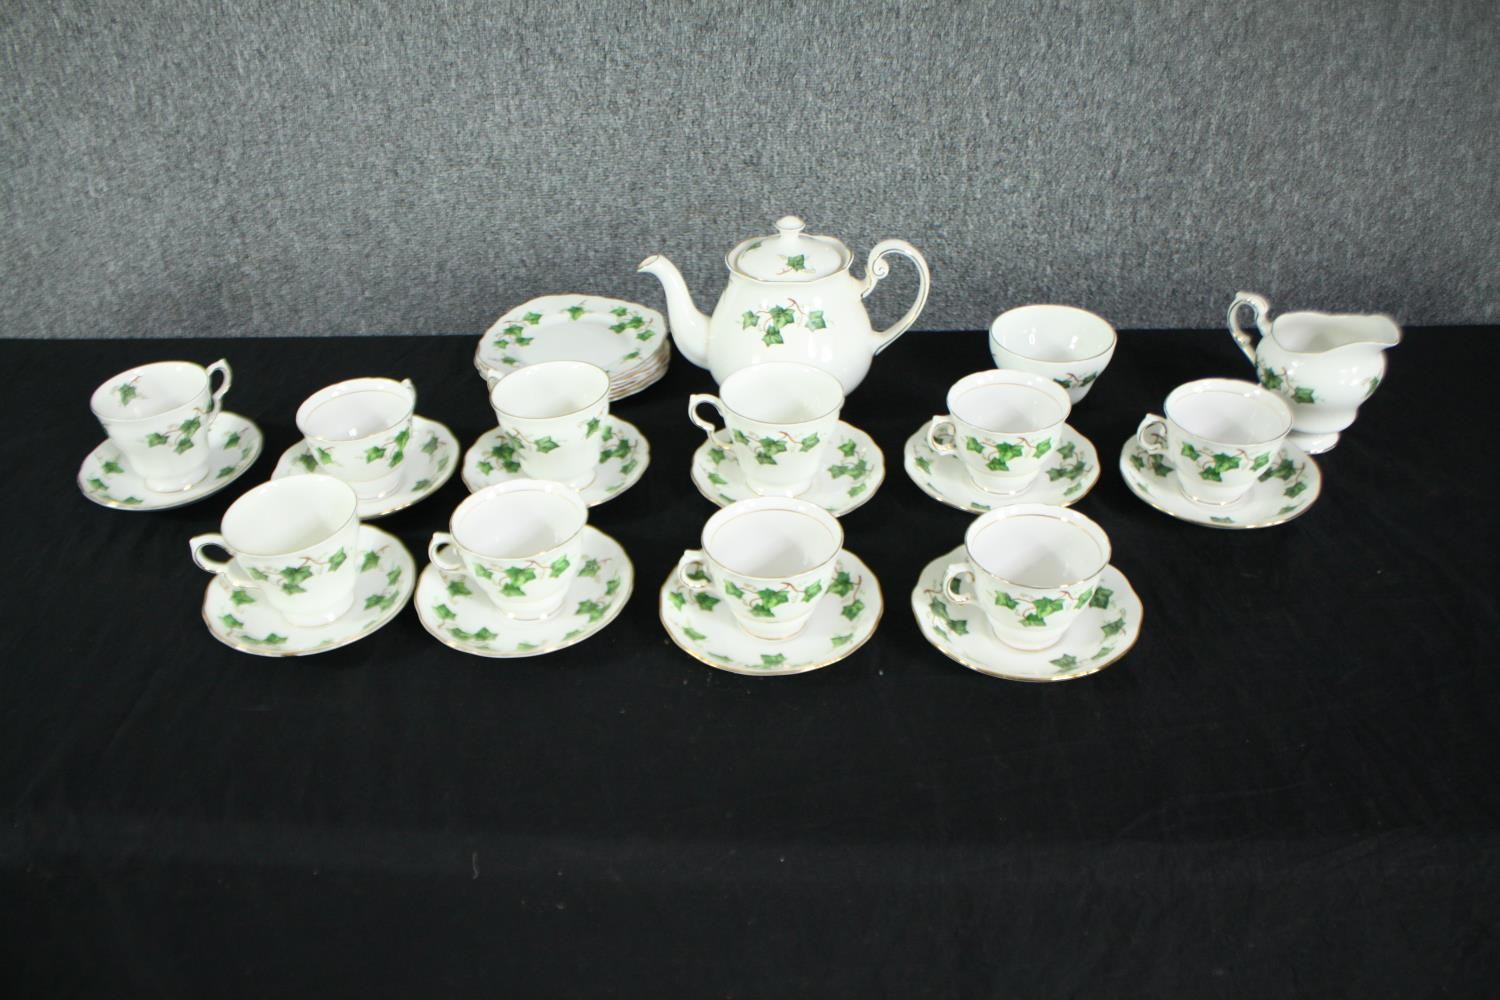 A Colclough ivy leaf tea set. Dated 1991. Incomplete. Includes a teapot, creamer, sugar bowl, side